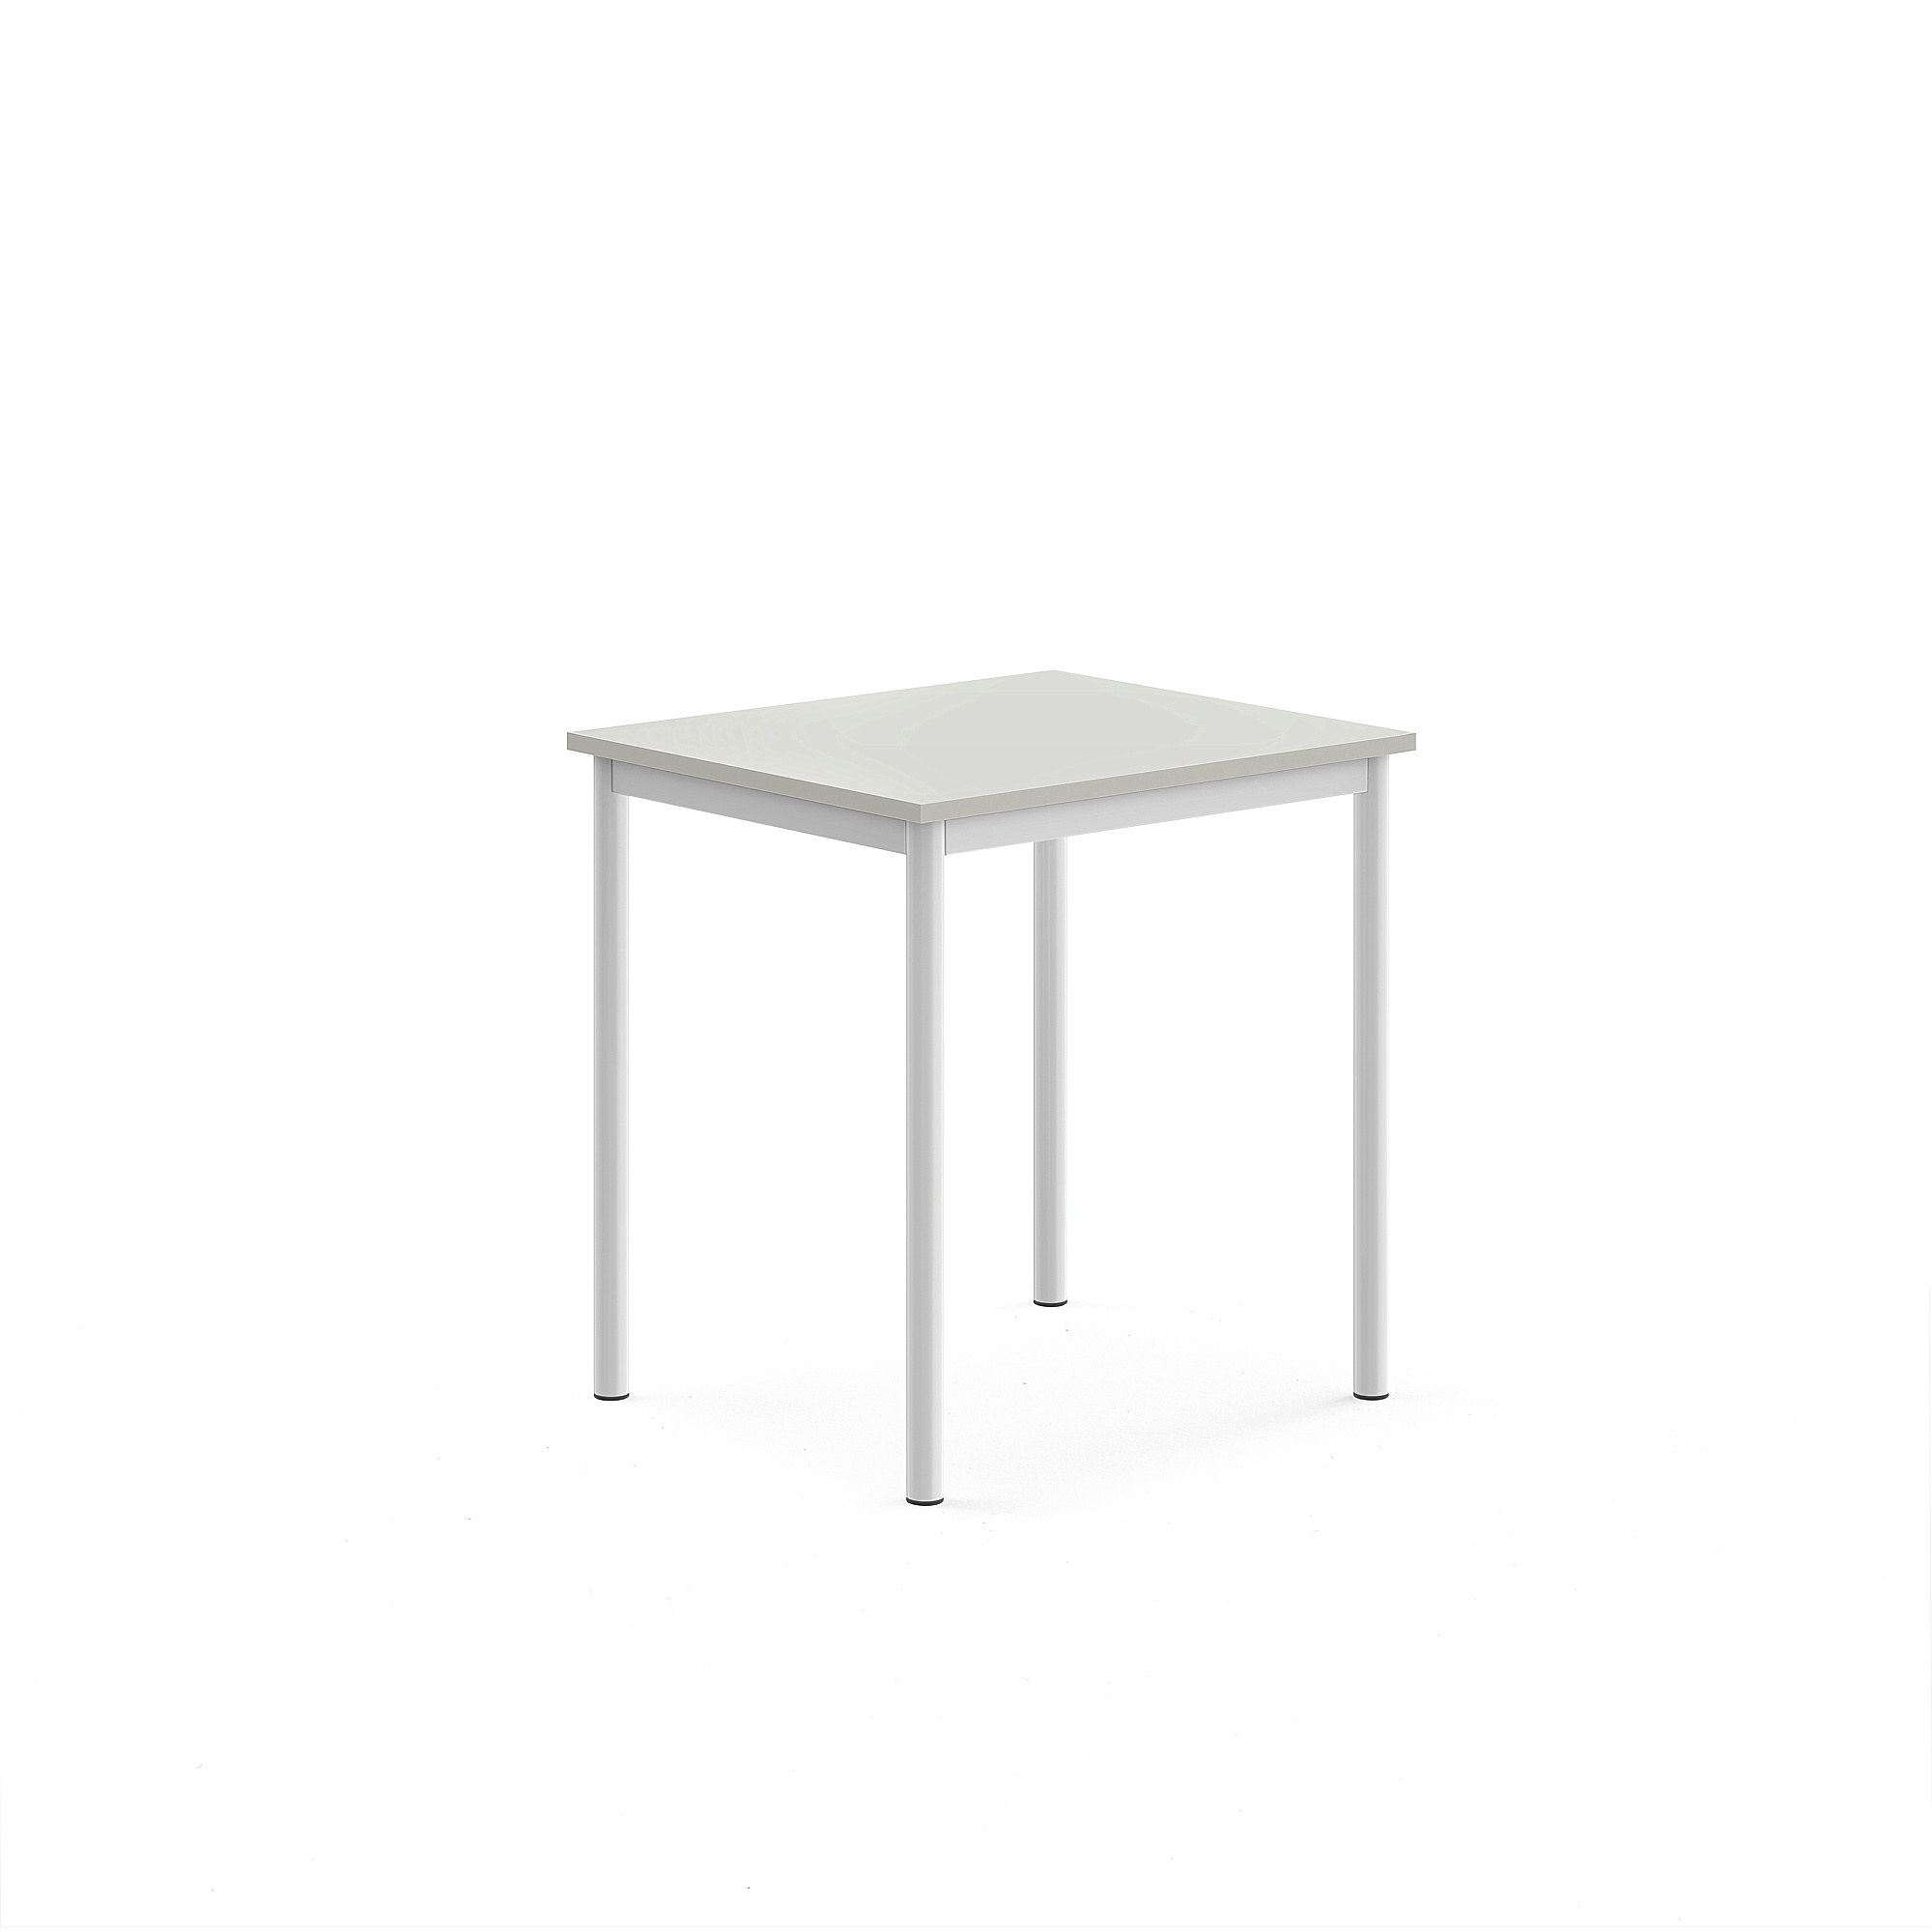 Stůl SONITUS, 700x600x720 mm, bílé nohy, HPL deska tlumící hluk, šedá